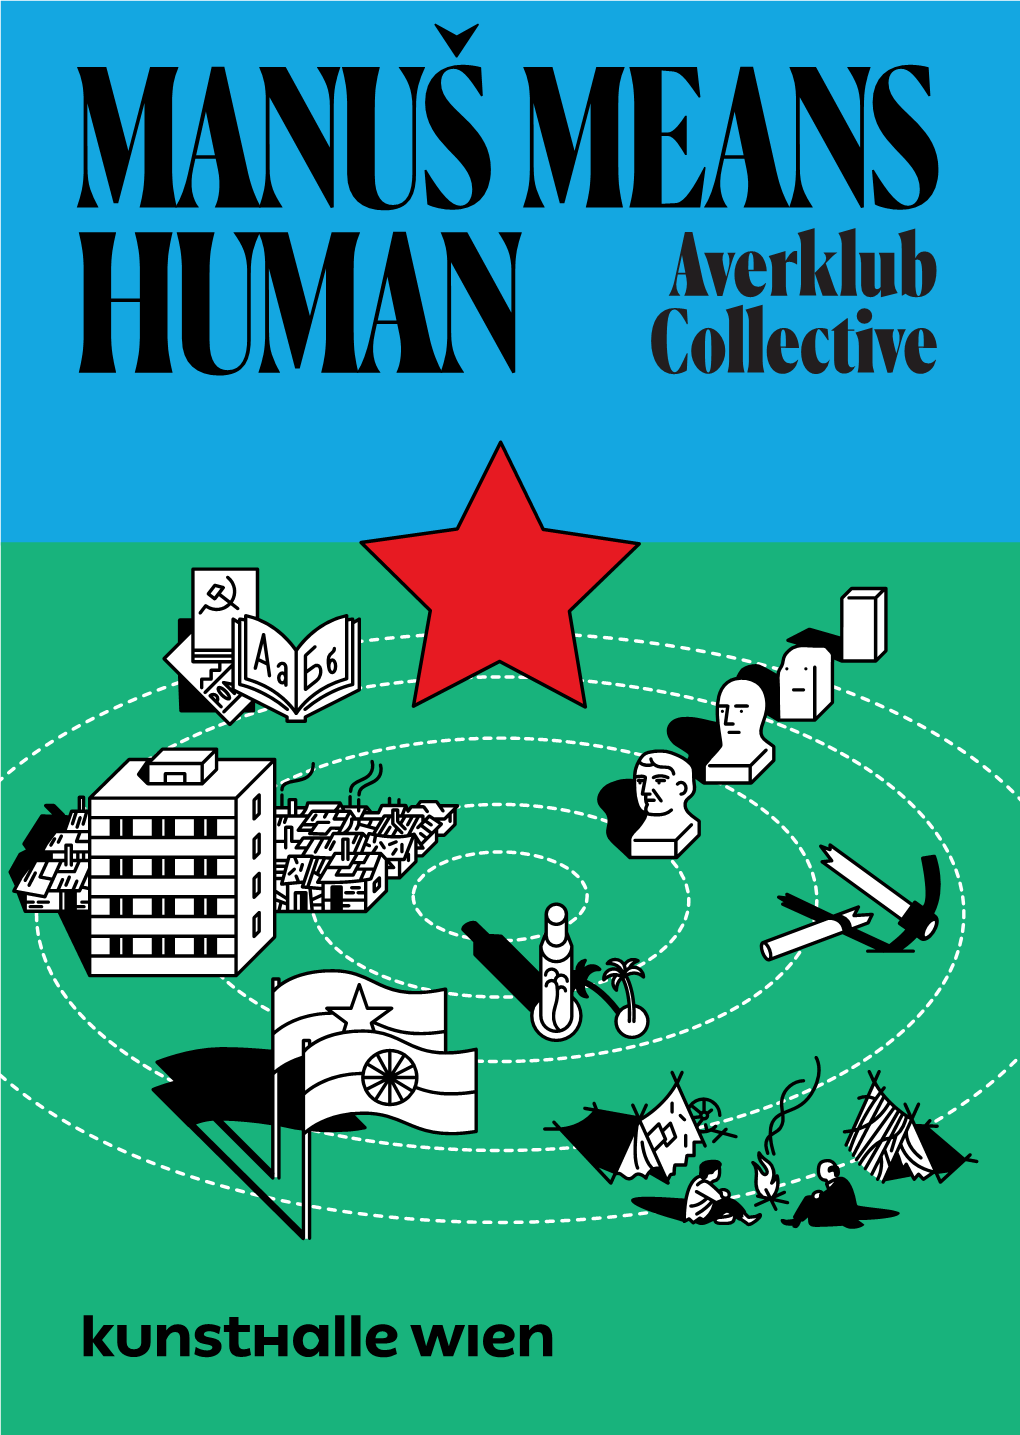 HUMAN Averklub Collective